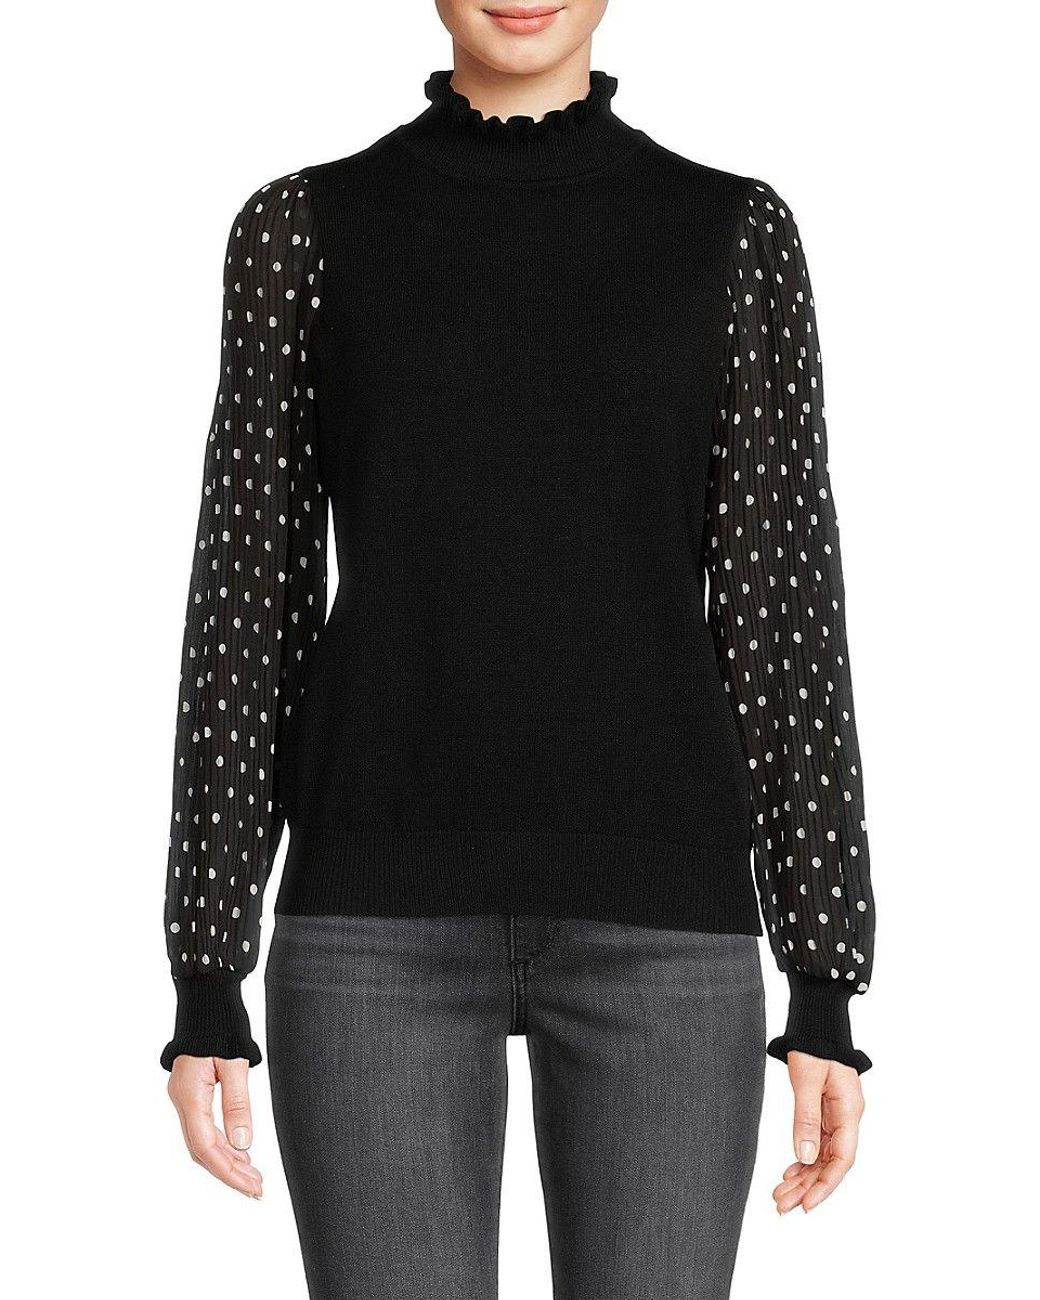 Nanette Lepore Dot Sleeve Mockneck Sweater in Black | Lyst